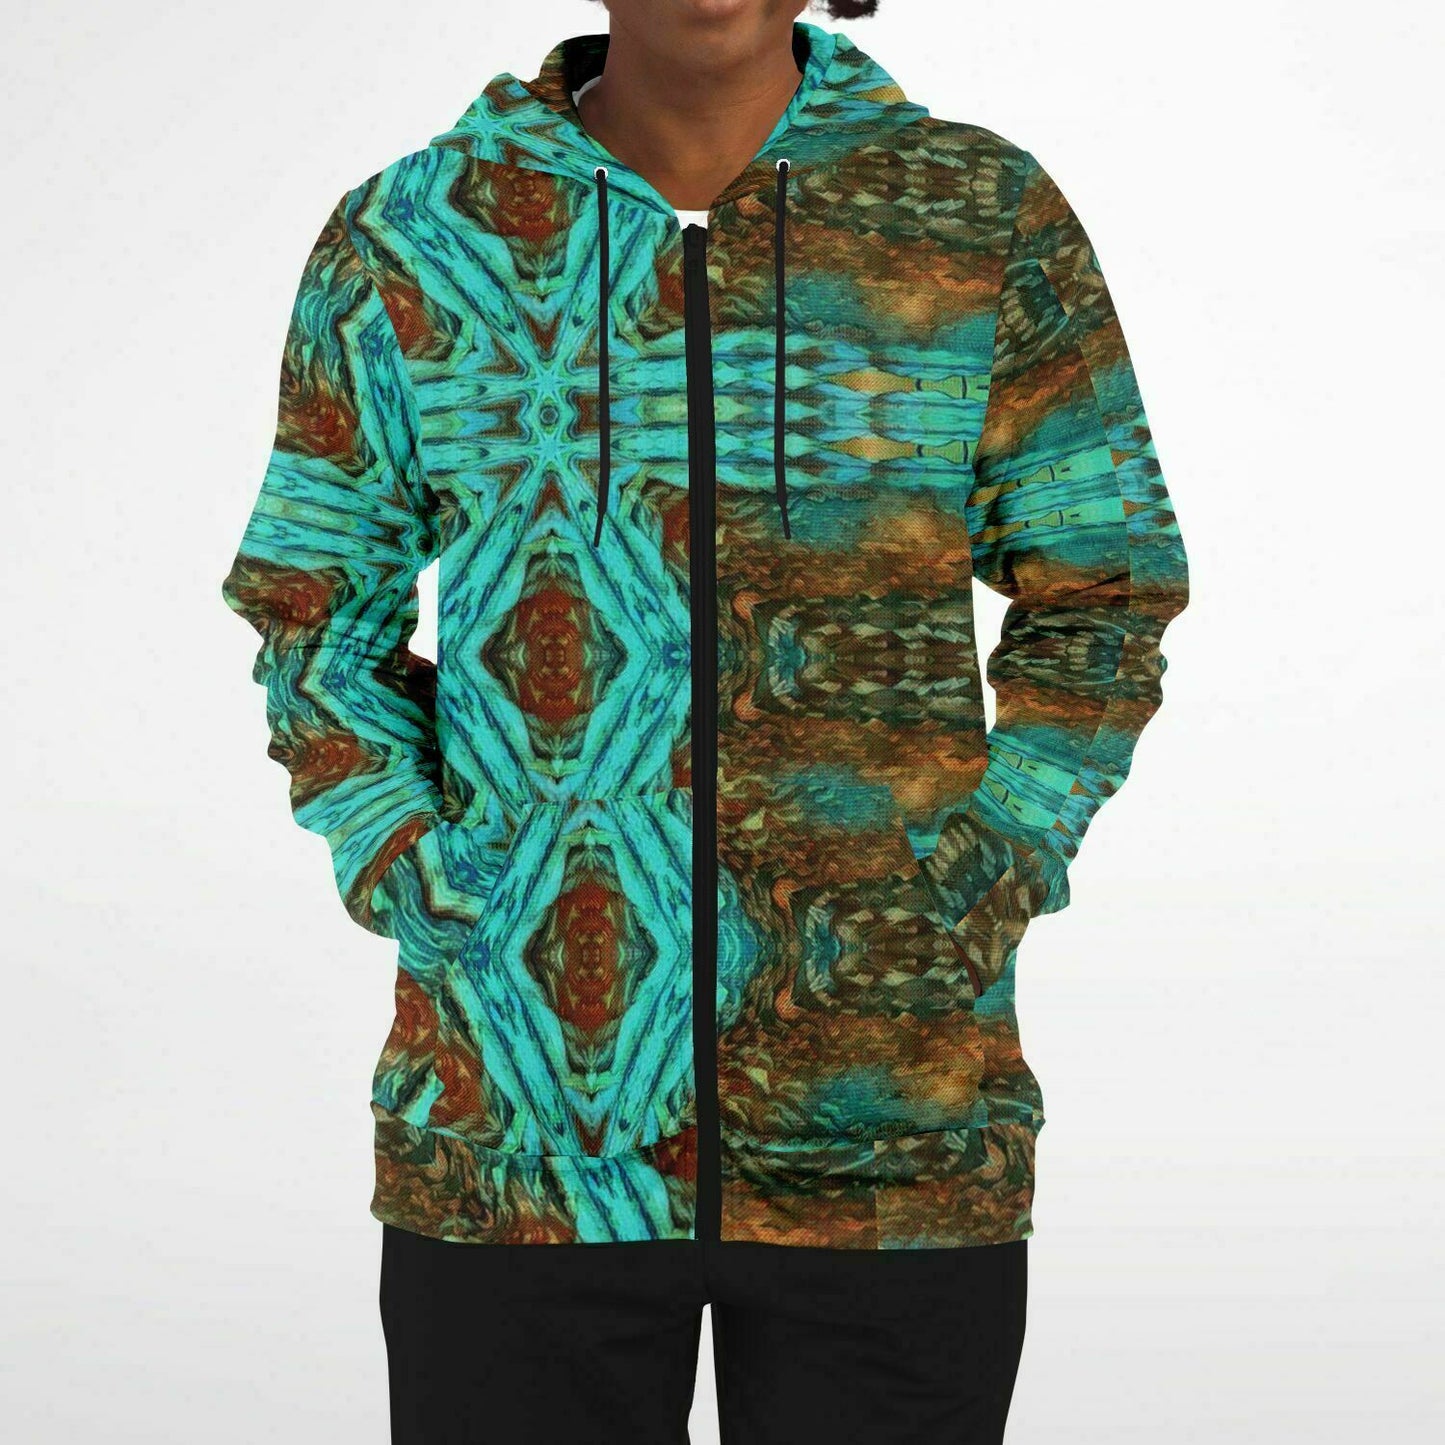 fullzip hoodie with cool design